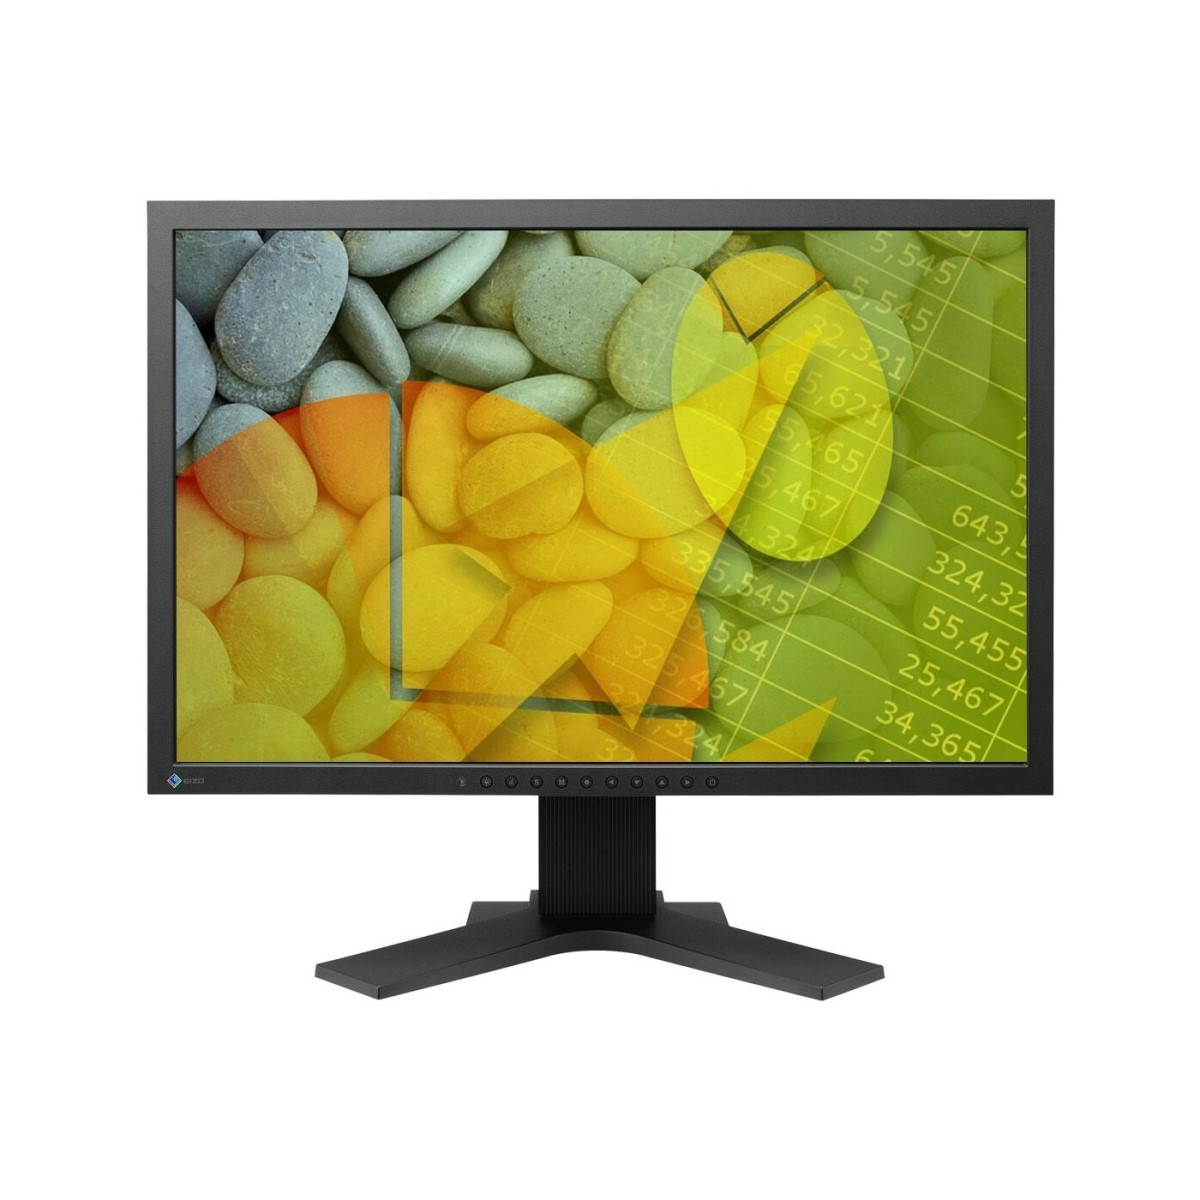 EIZO FlexScan S2202W  22 inch LCD  1680 x 1050  16:10  negru  monitor refurbished